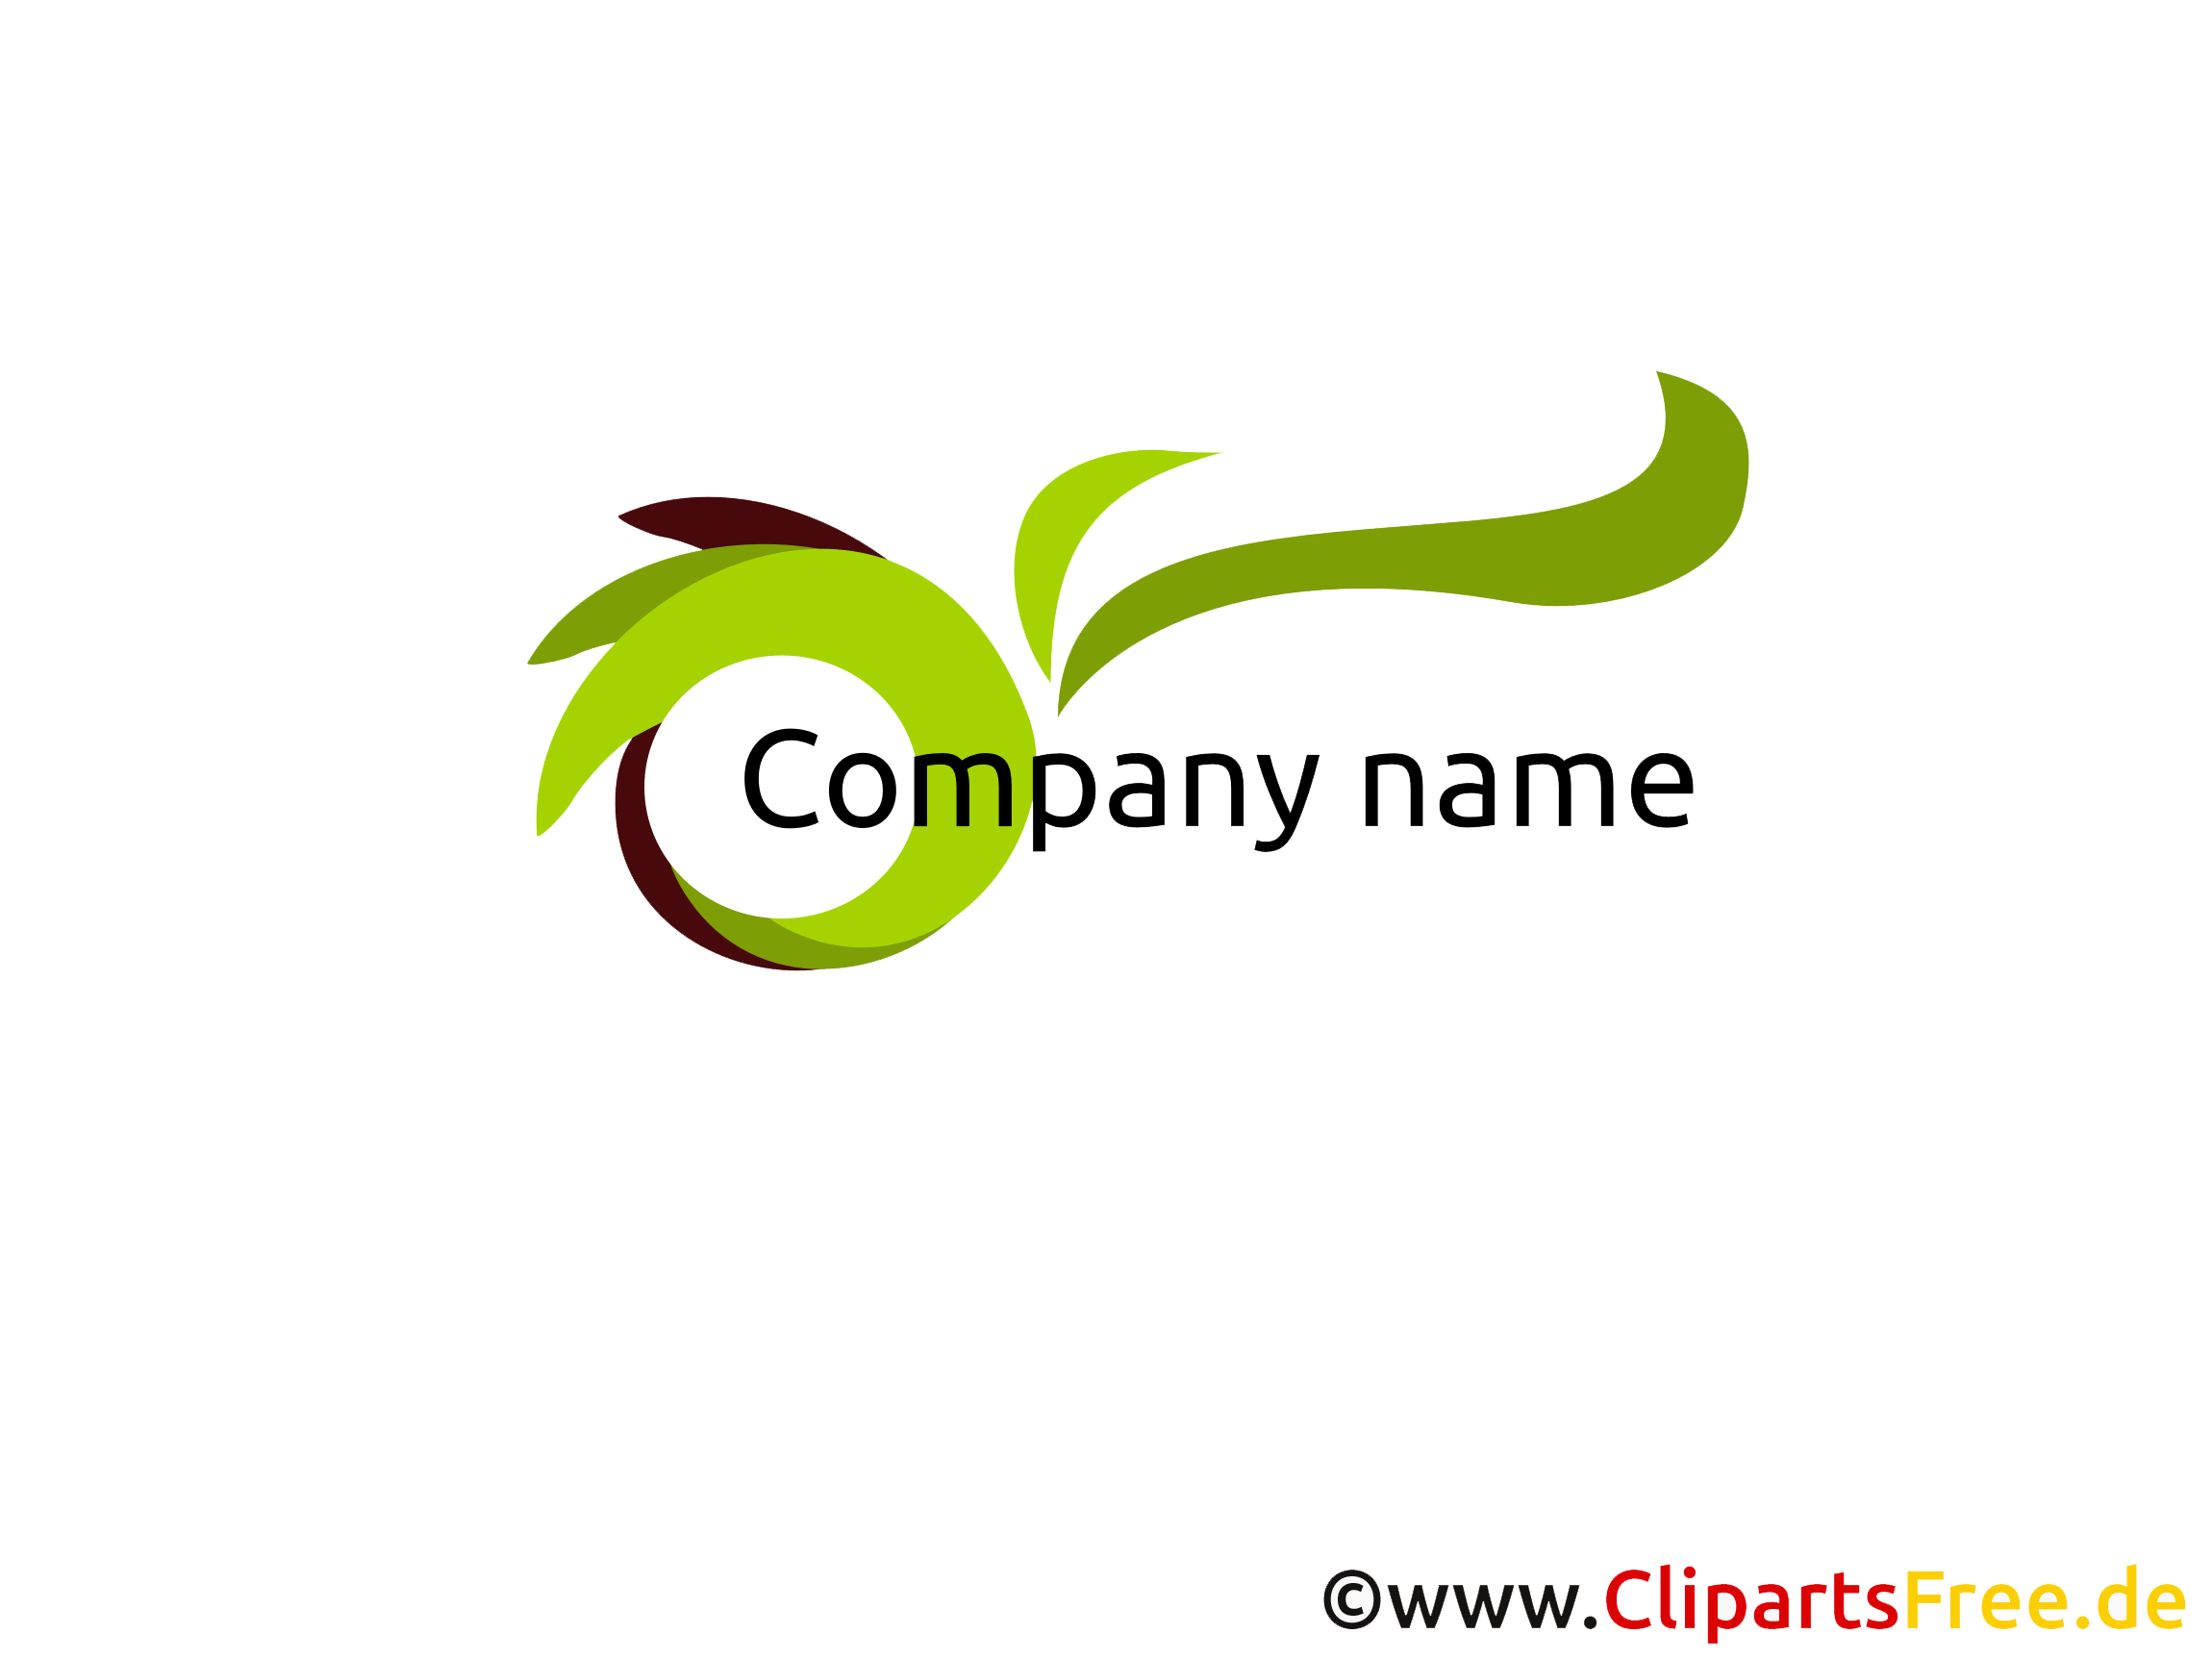 Compagnie clip art gratuit – Logo dessin